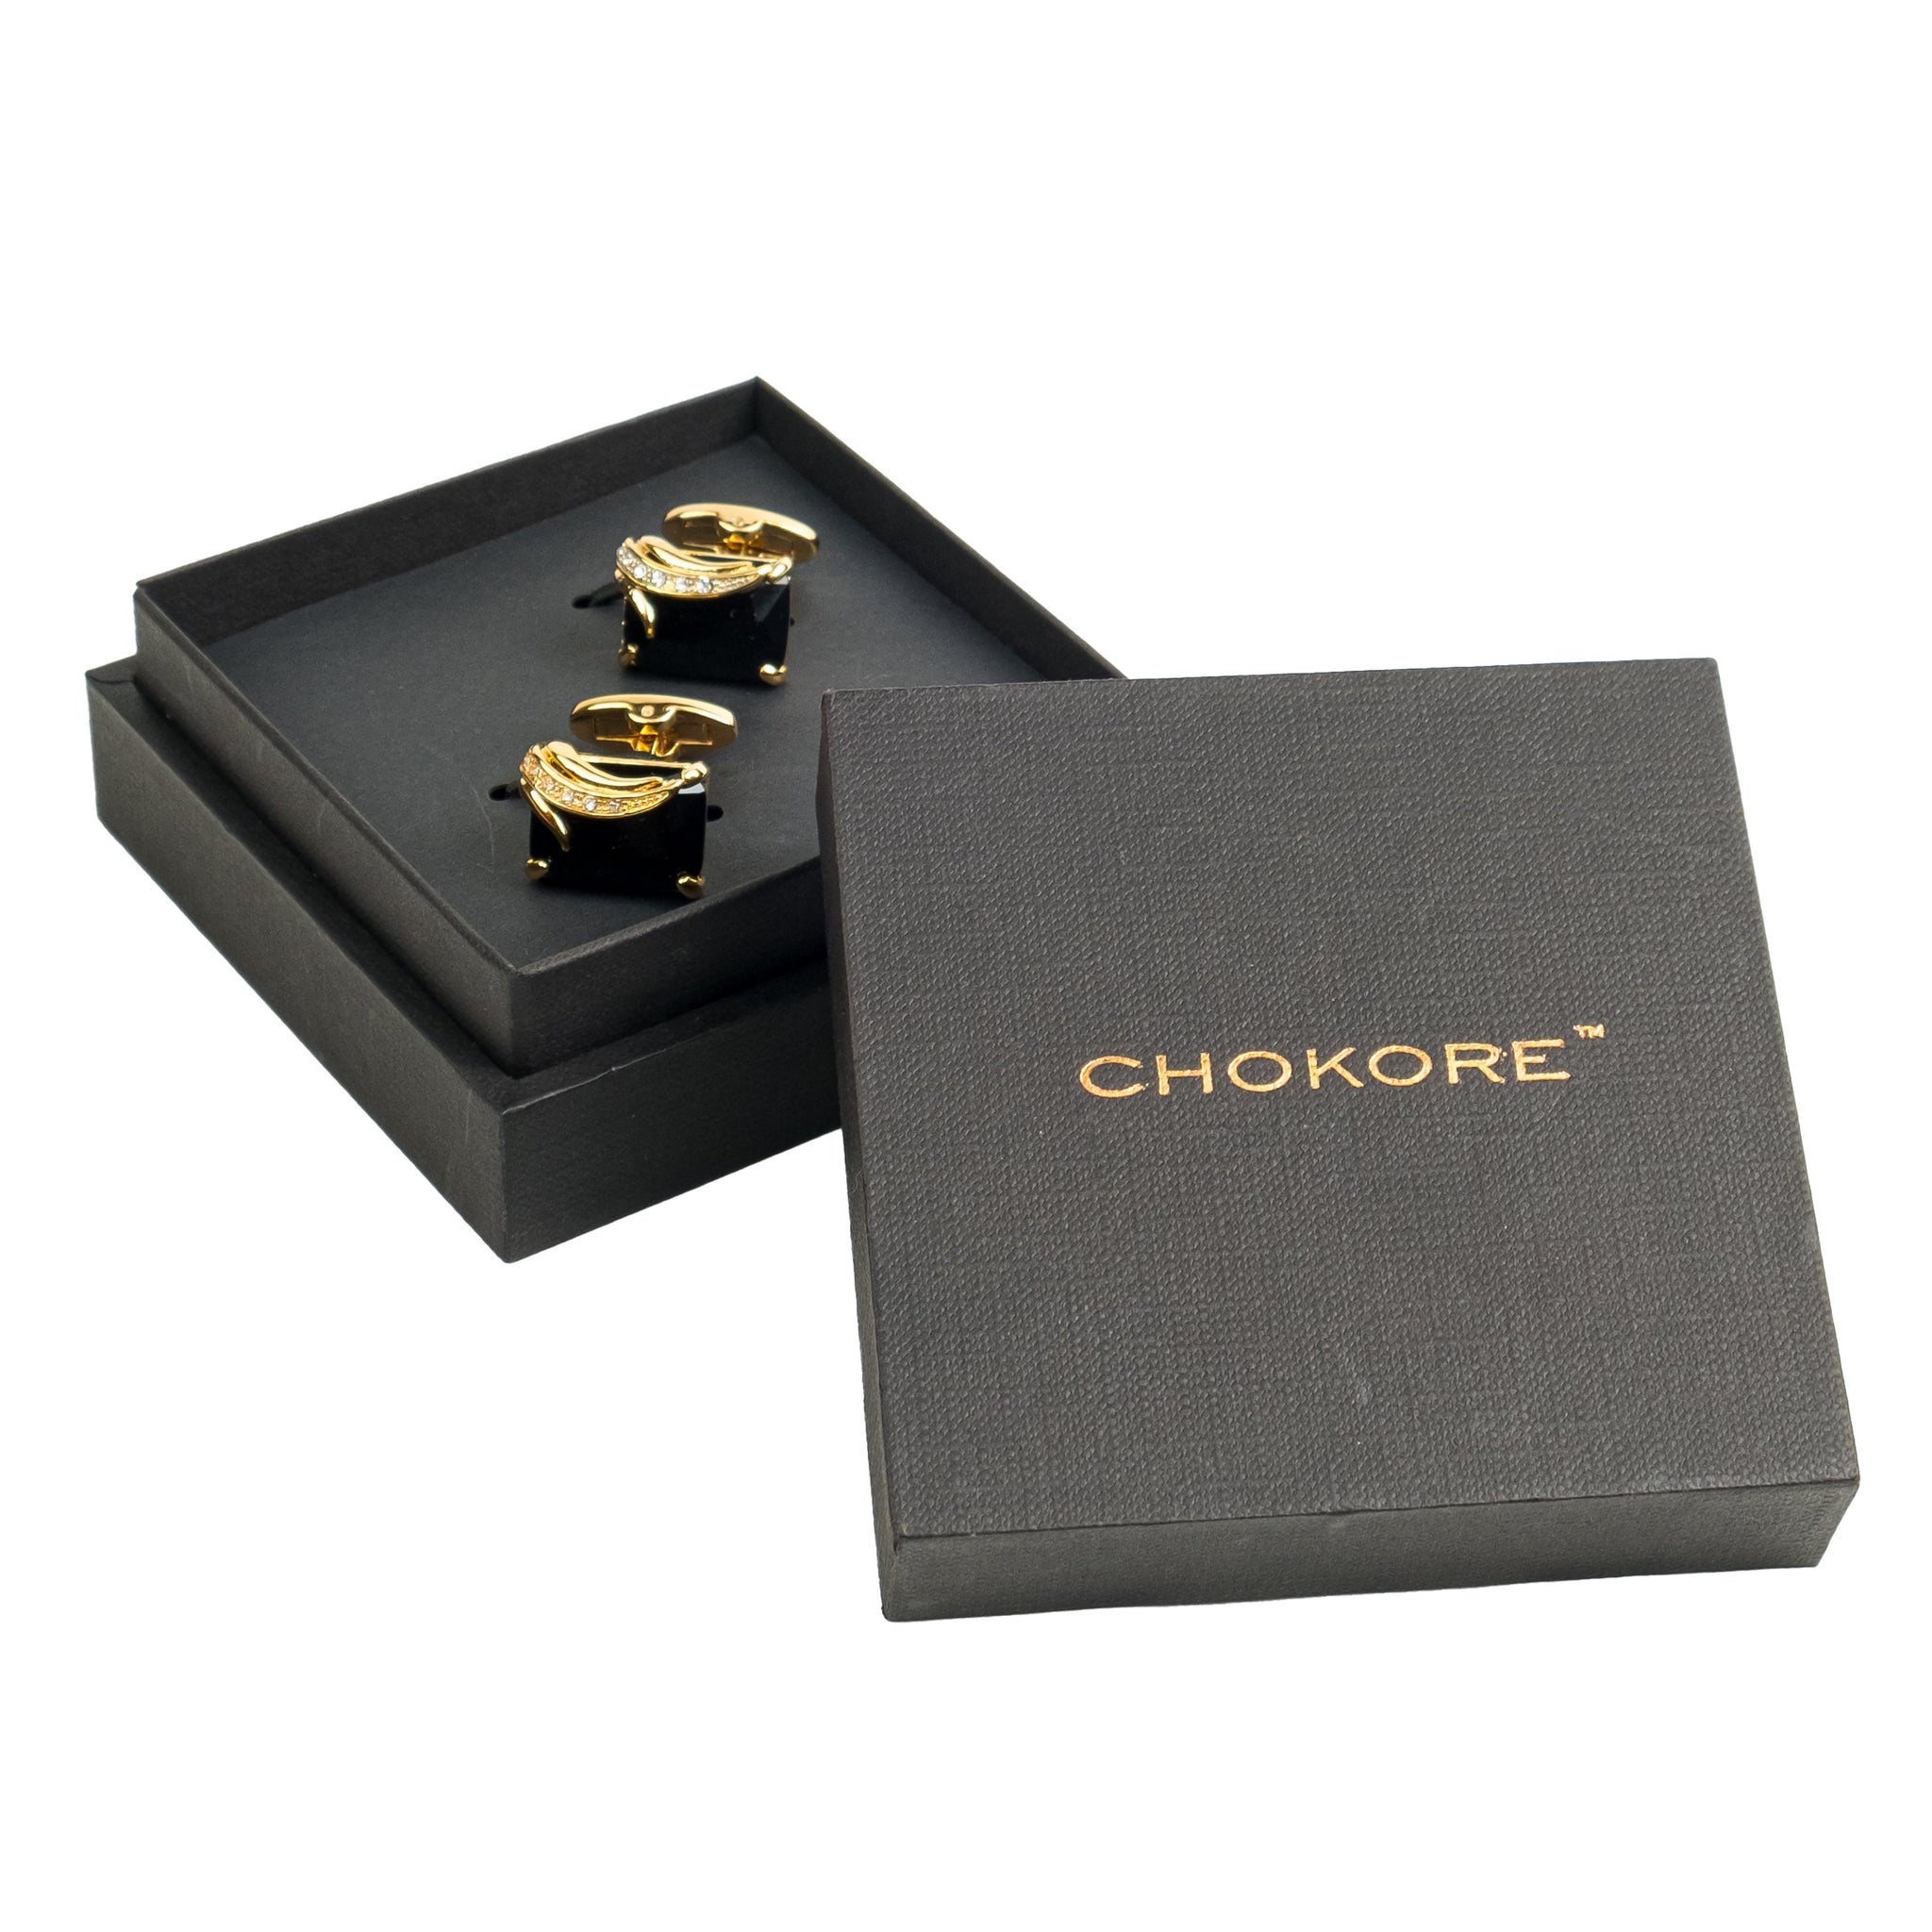 Chokore Black Agate Cufflinks with Gold Plating